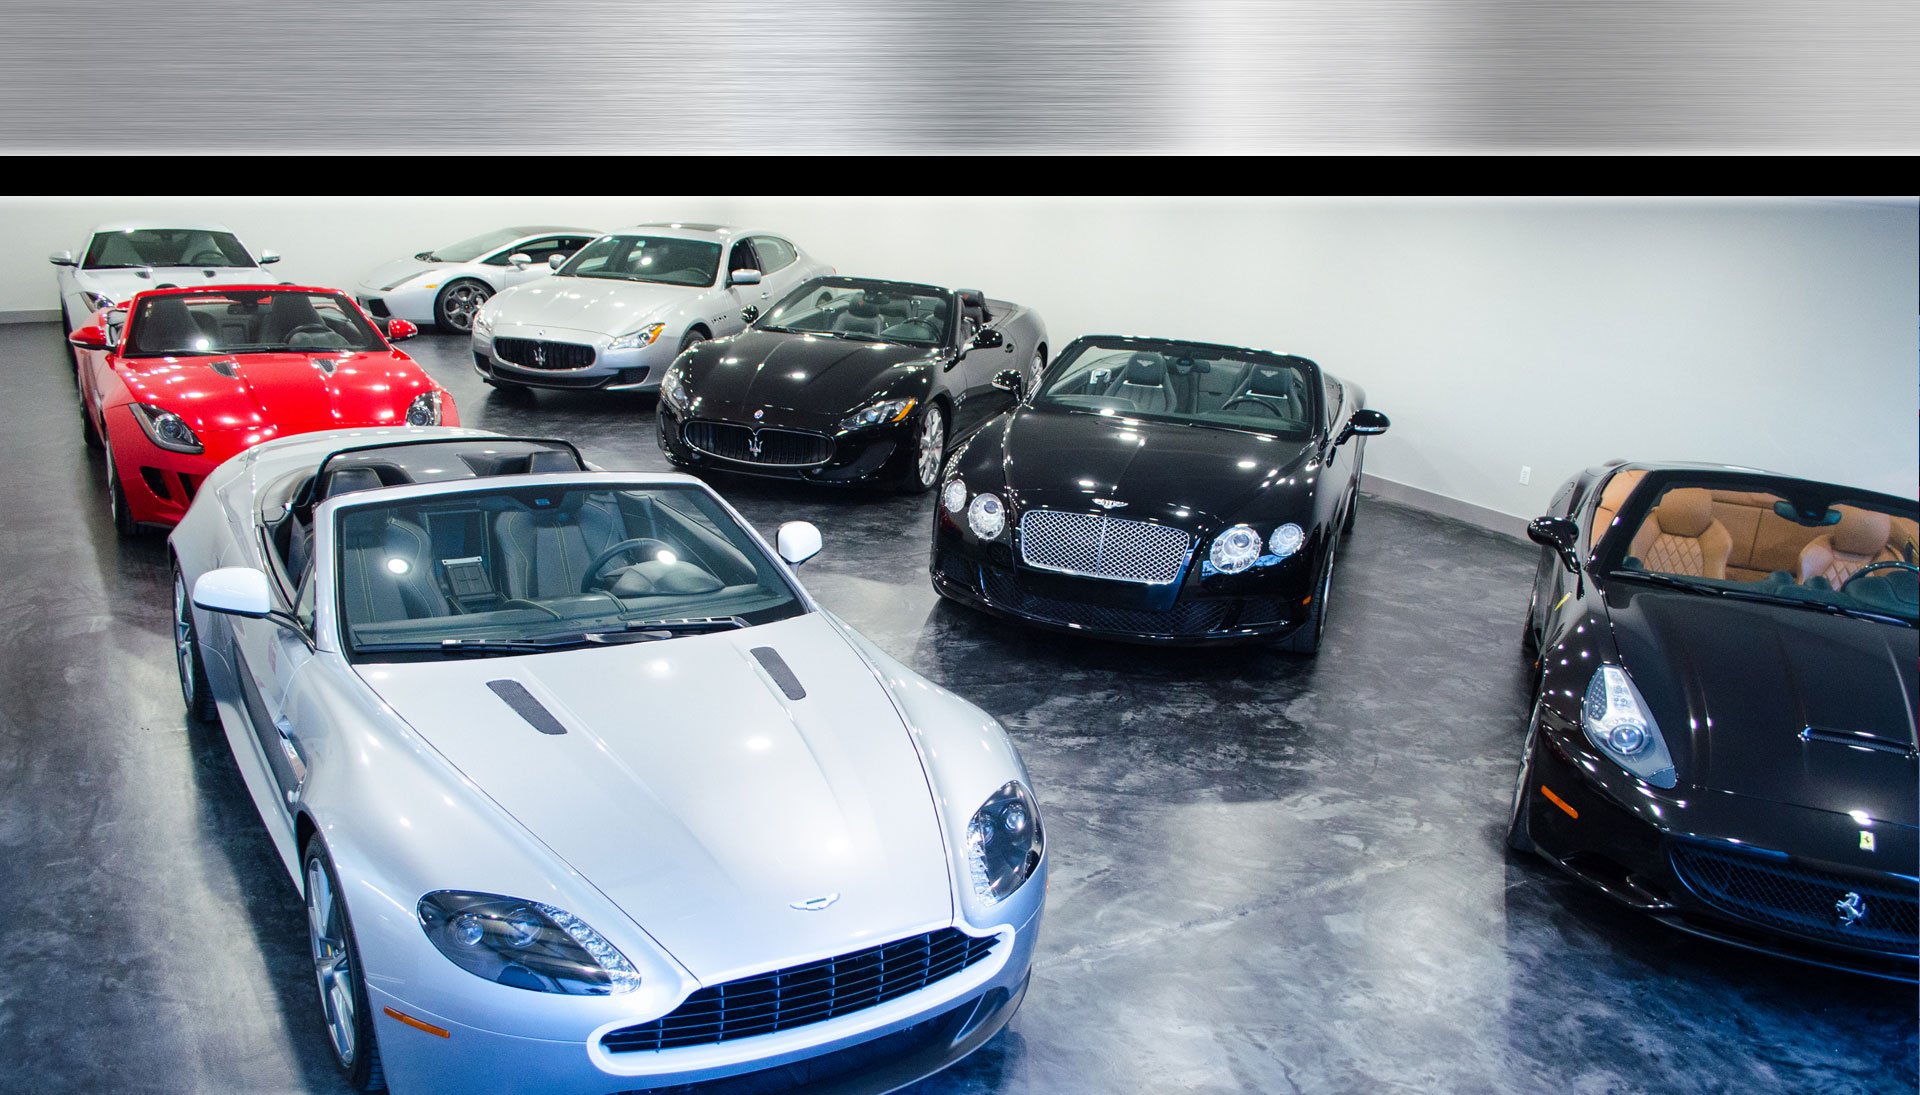 The Auto Palace - Luxury Cars For Sale - Warren MI Dealer ...